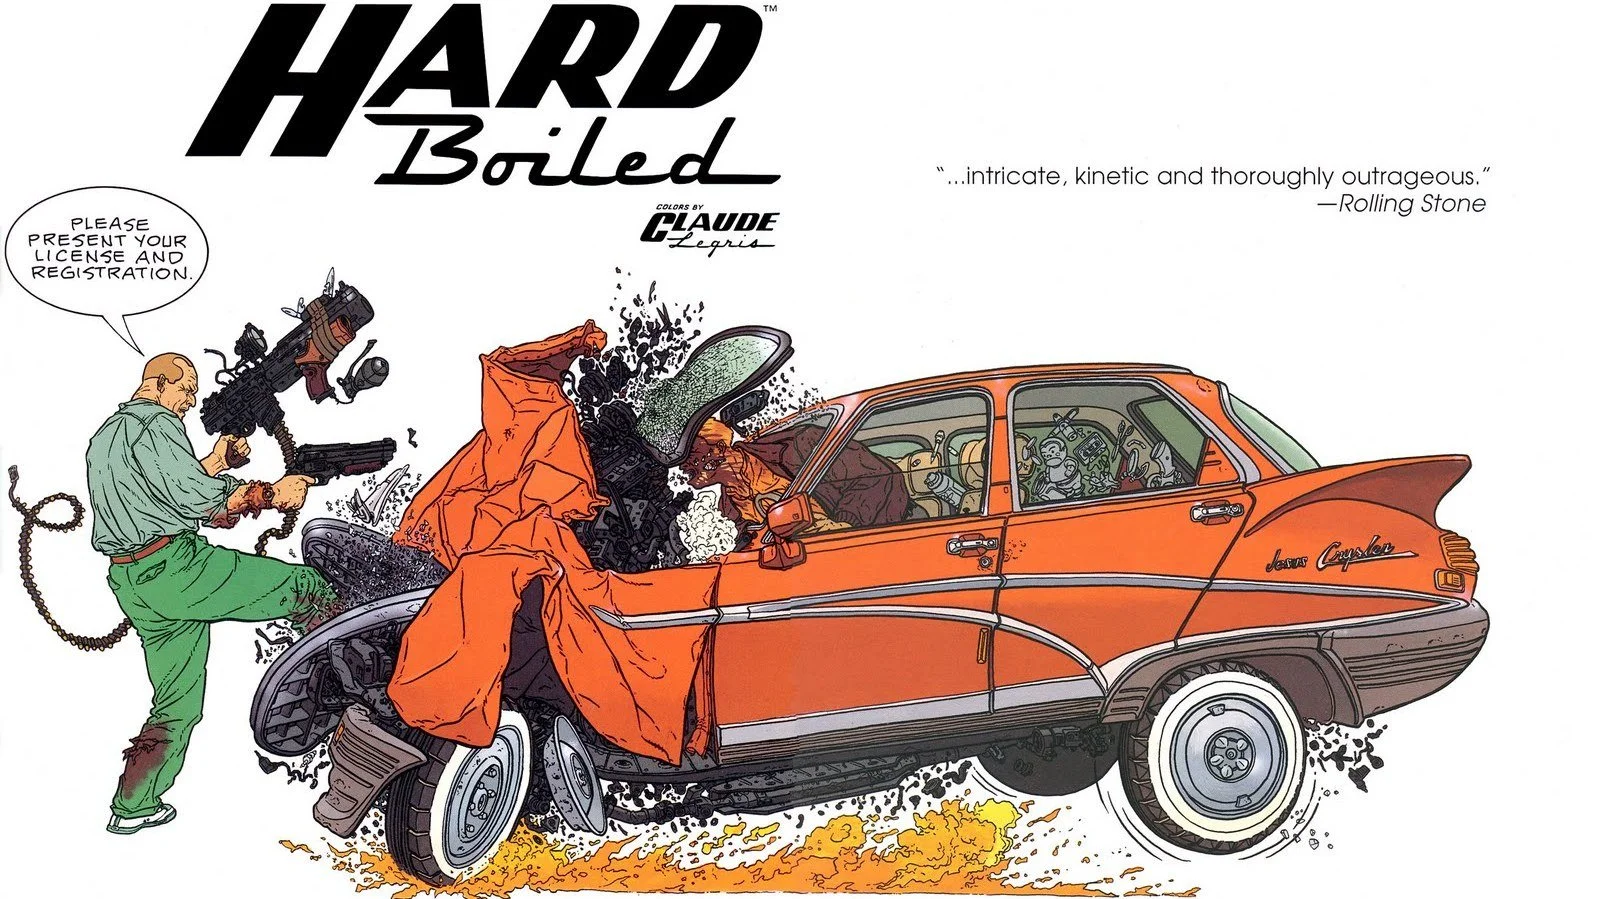 Комикс недели: Hard Boiled - фото 1